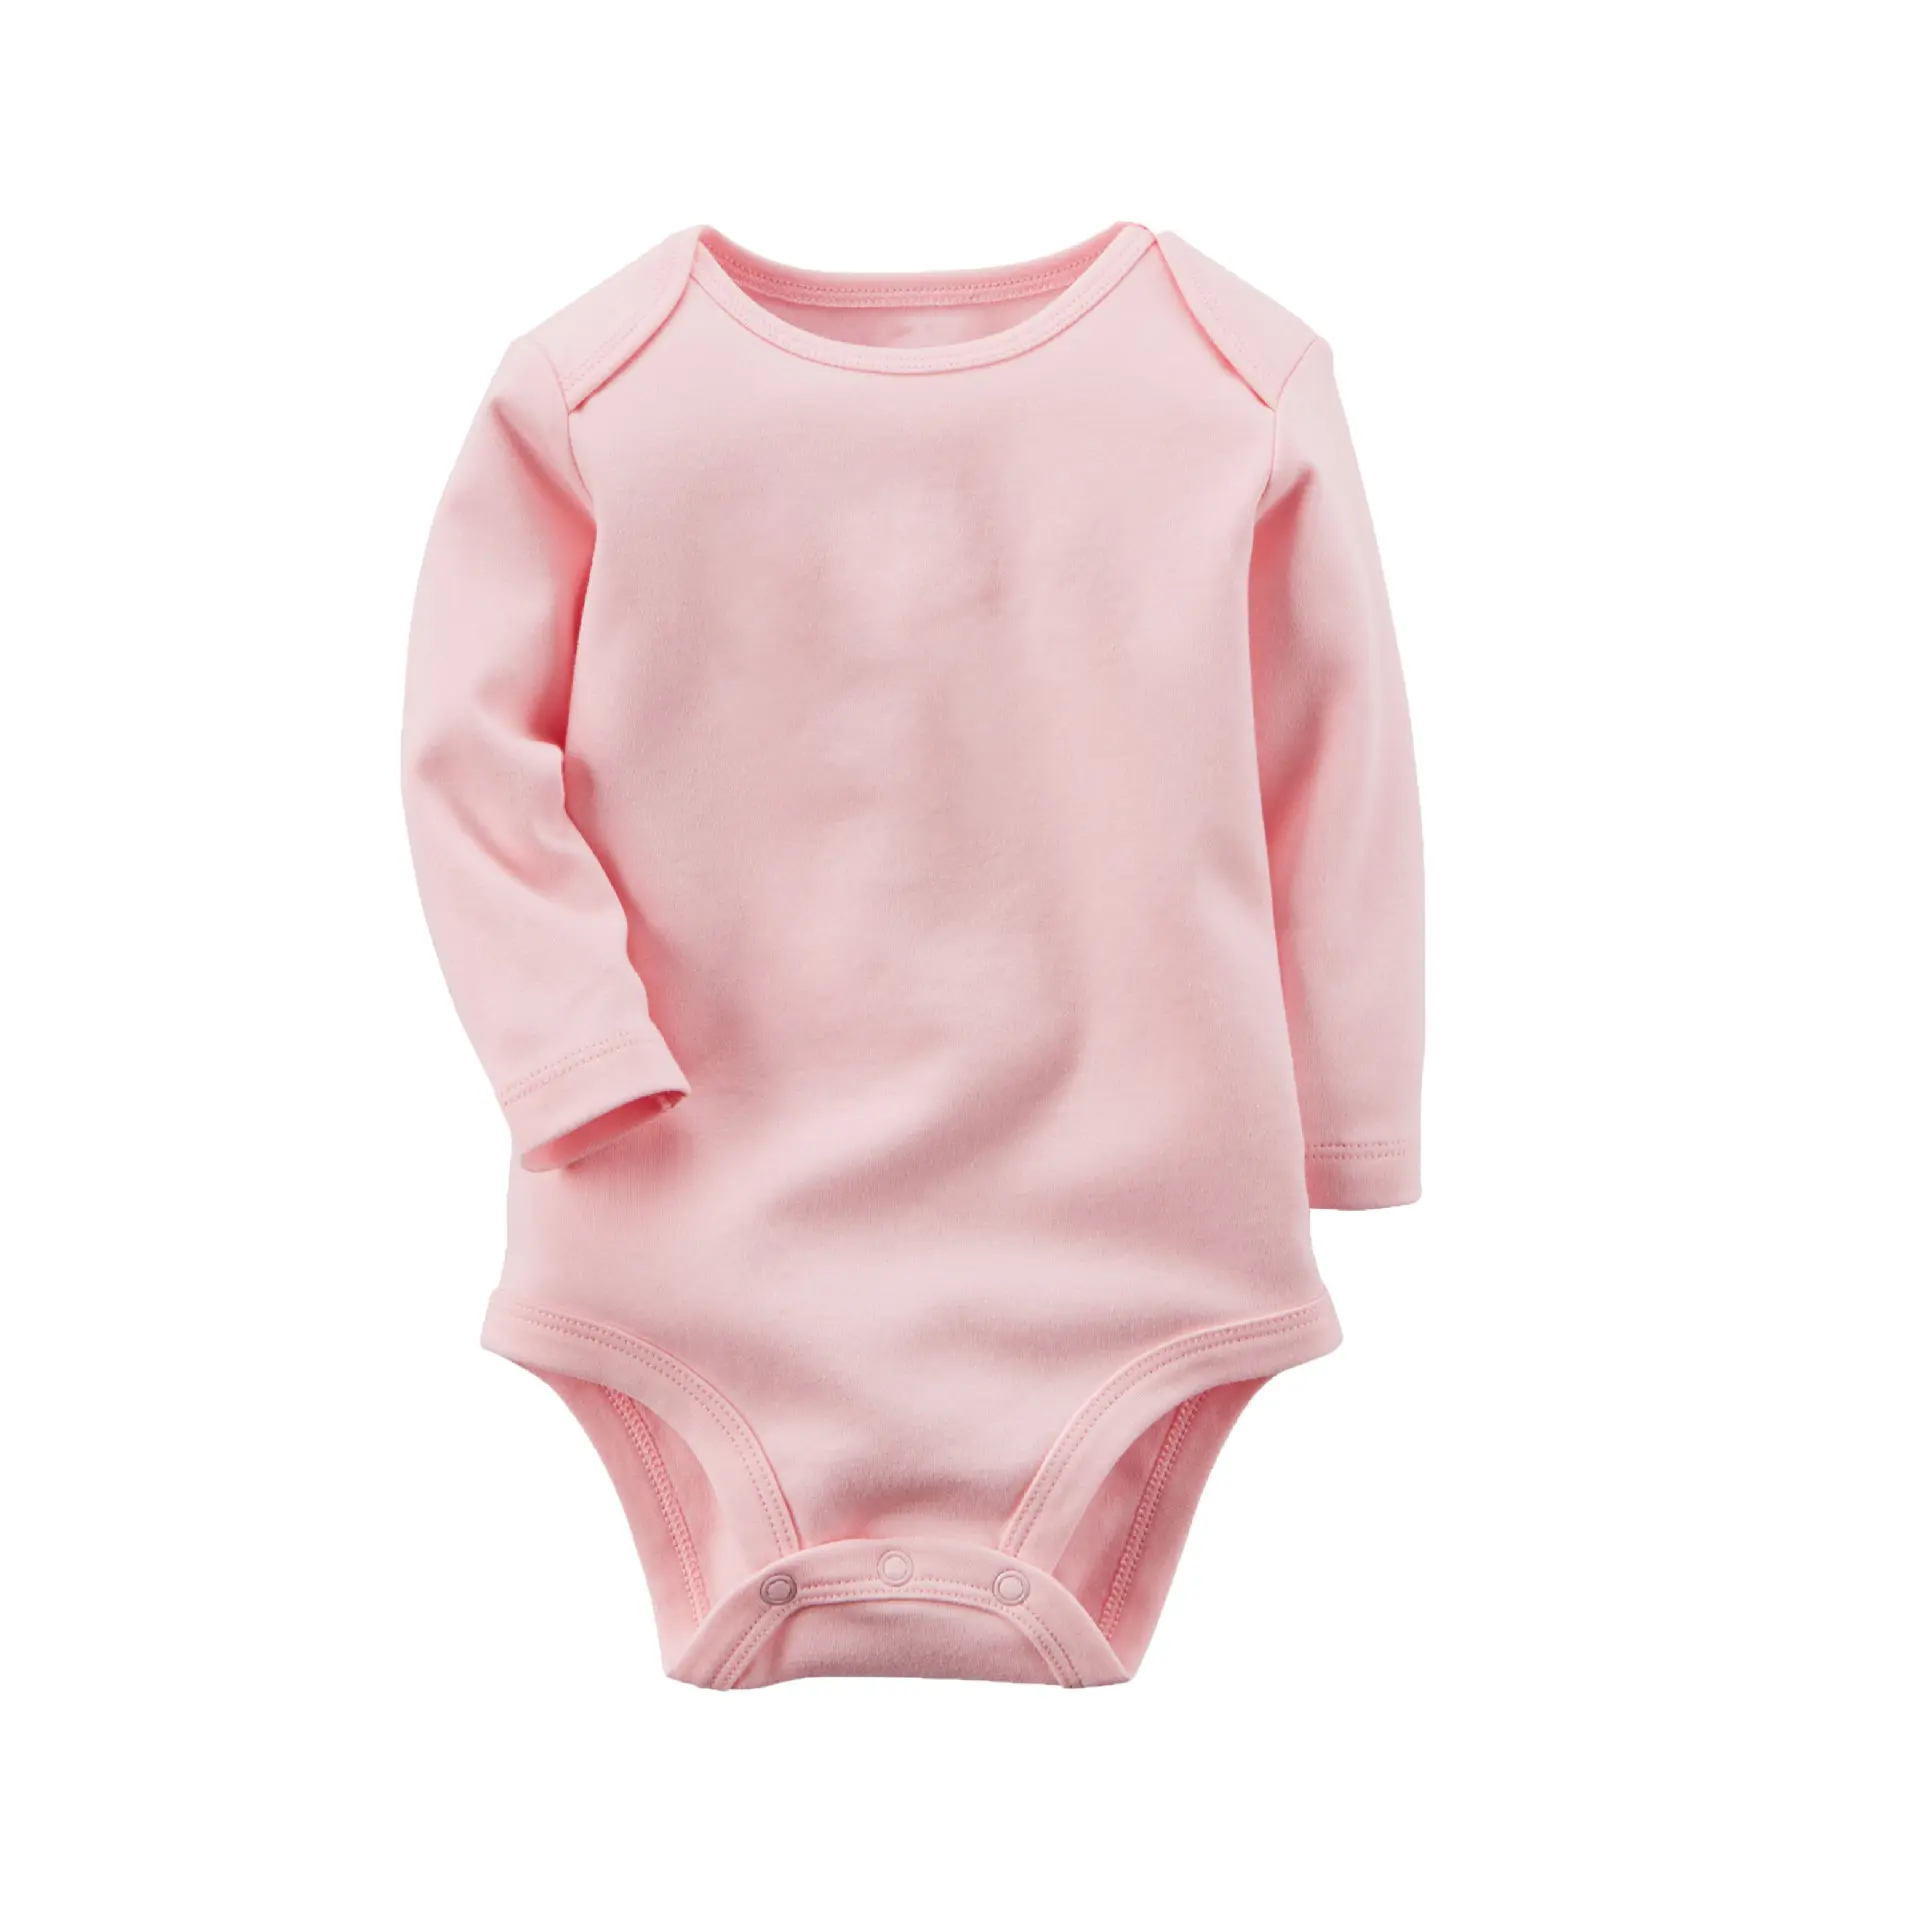 Solid Plain Baby Romper Blank Baby Onesie Baby Bodysuits Clothing Jumpsuit Pajamas.